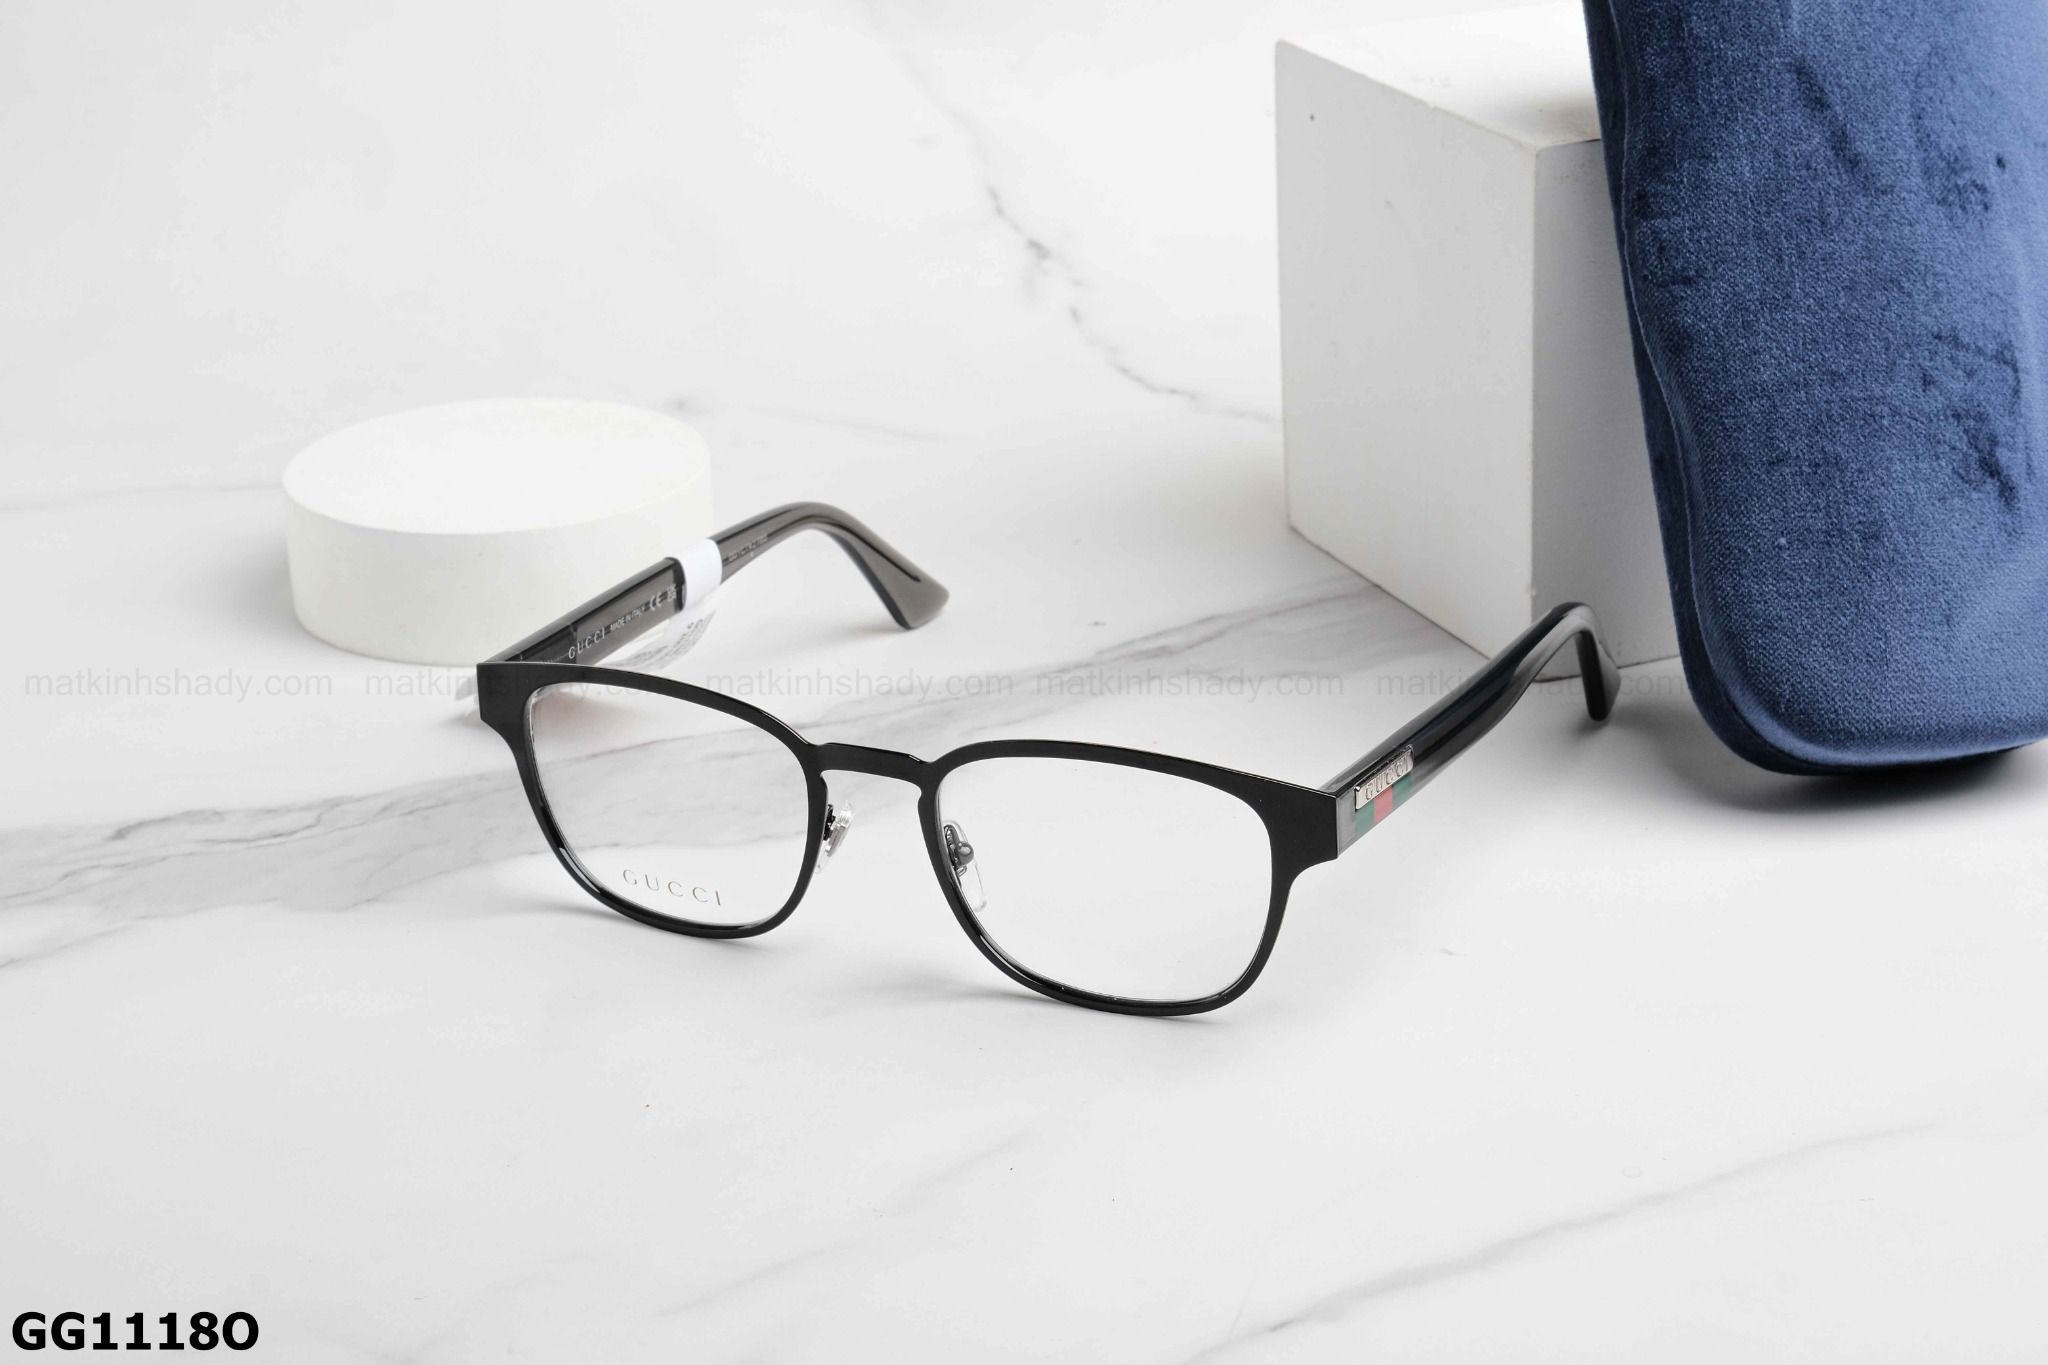  Gucci Eyewear - Glasses - GG1118O 